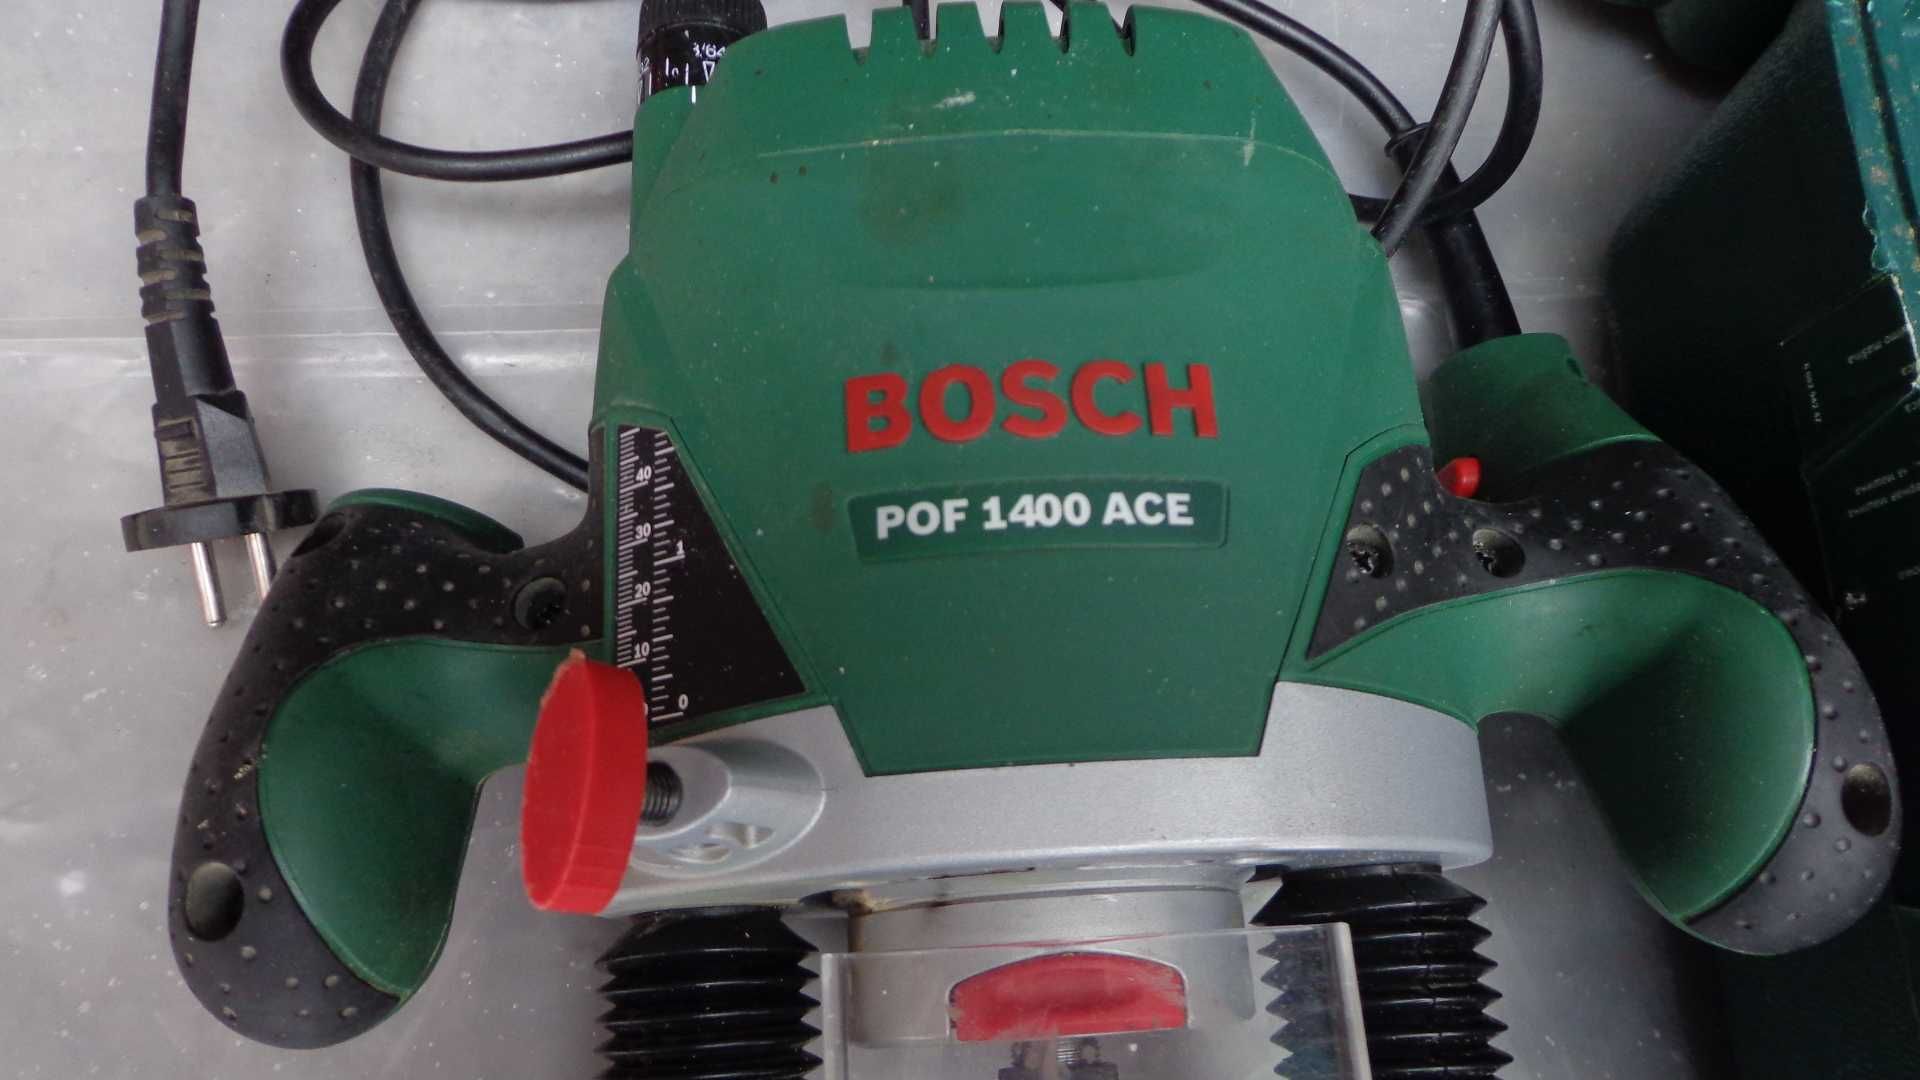 Фрезер BOSCH POF 1400 ACE